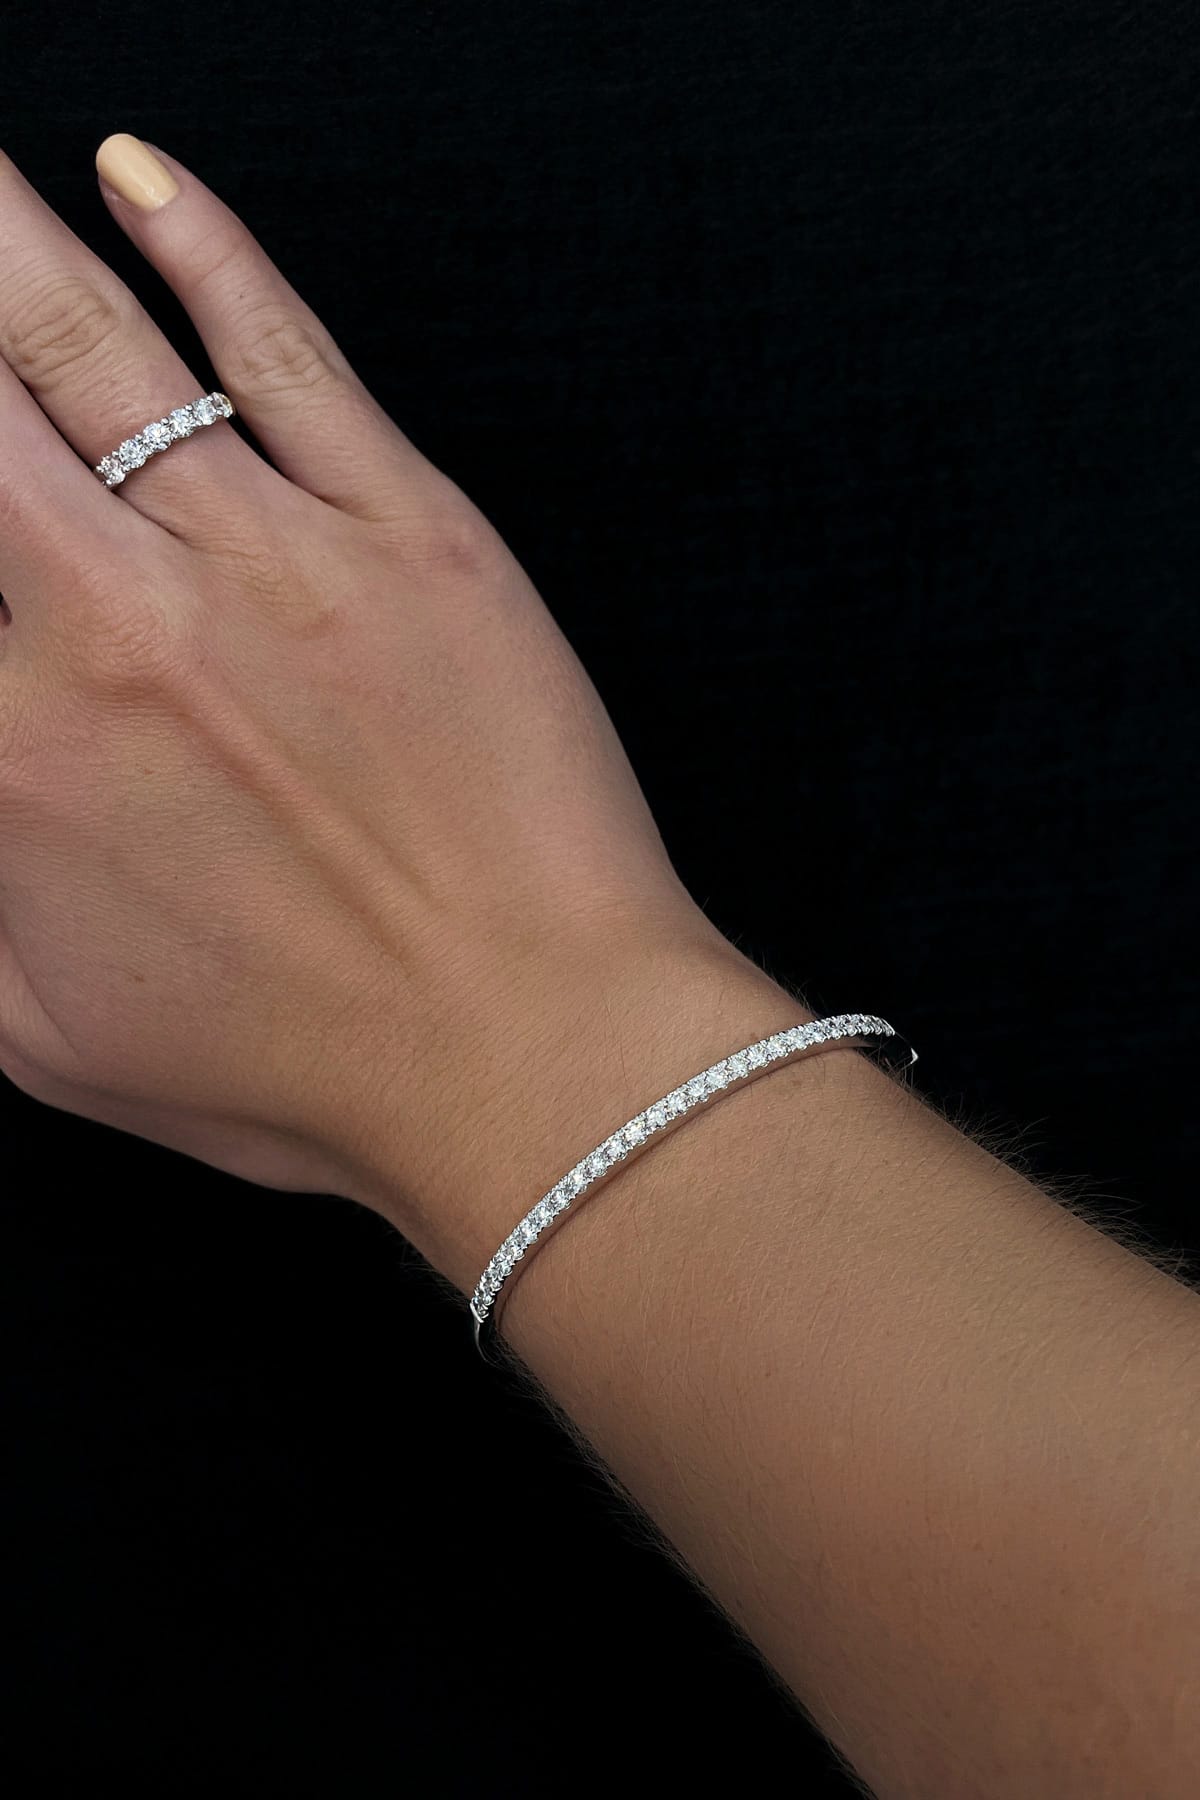 18 Carat White Gold Diamond Set Bangle available at LeGassick Diamonds and Jewellery Gold Coast, Australia.